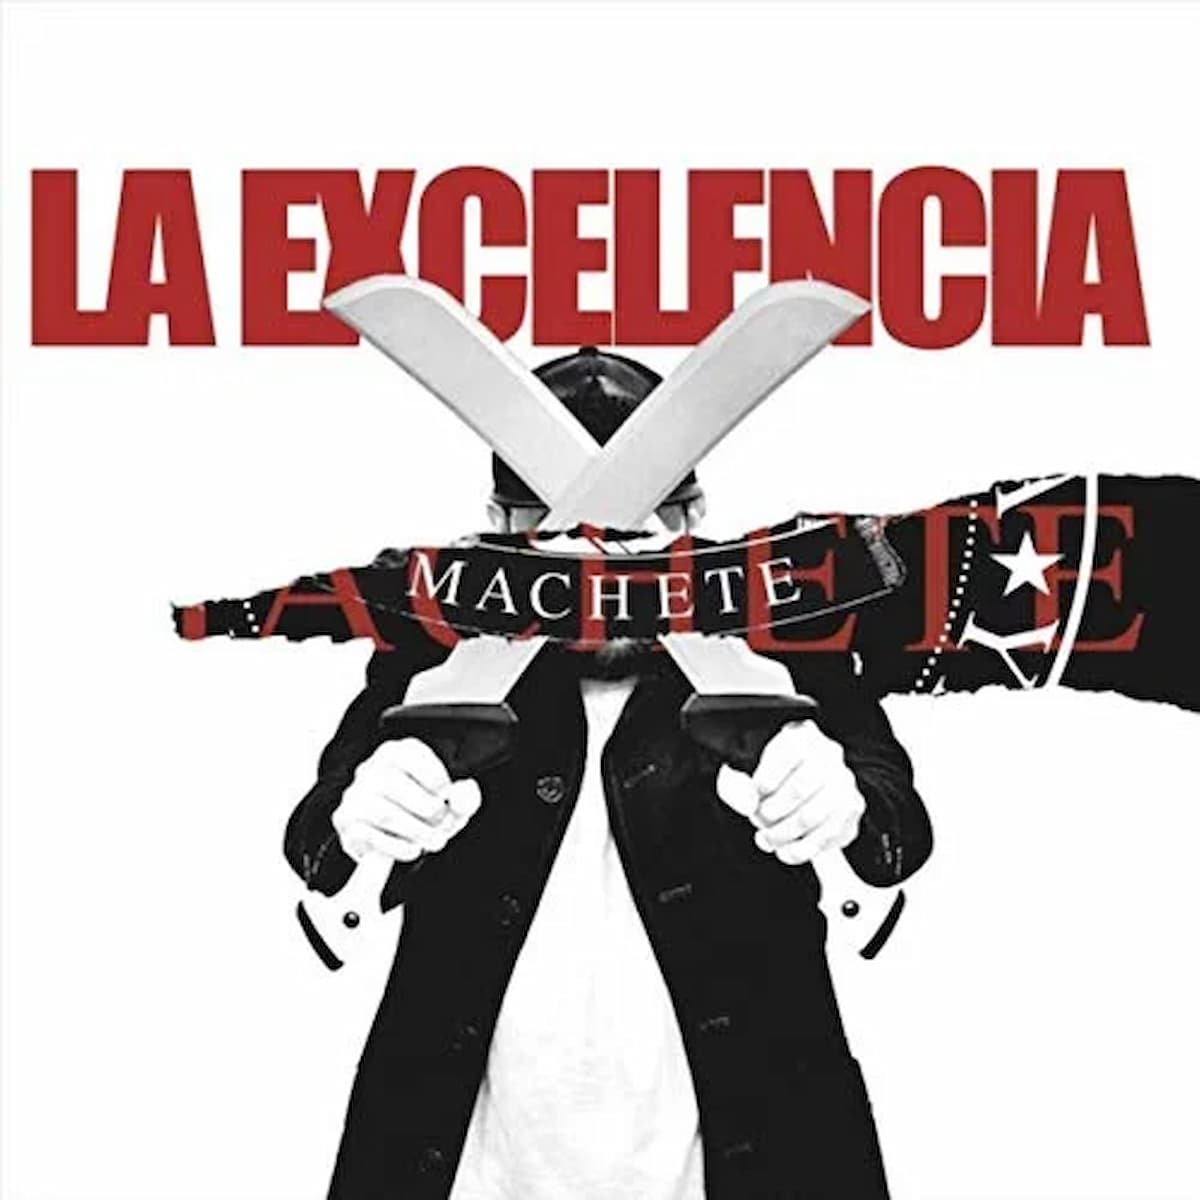 La Excelencia “Machete” Salsa-Album 2020